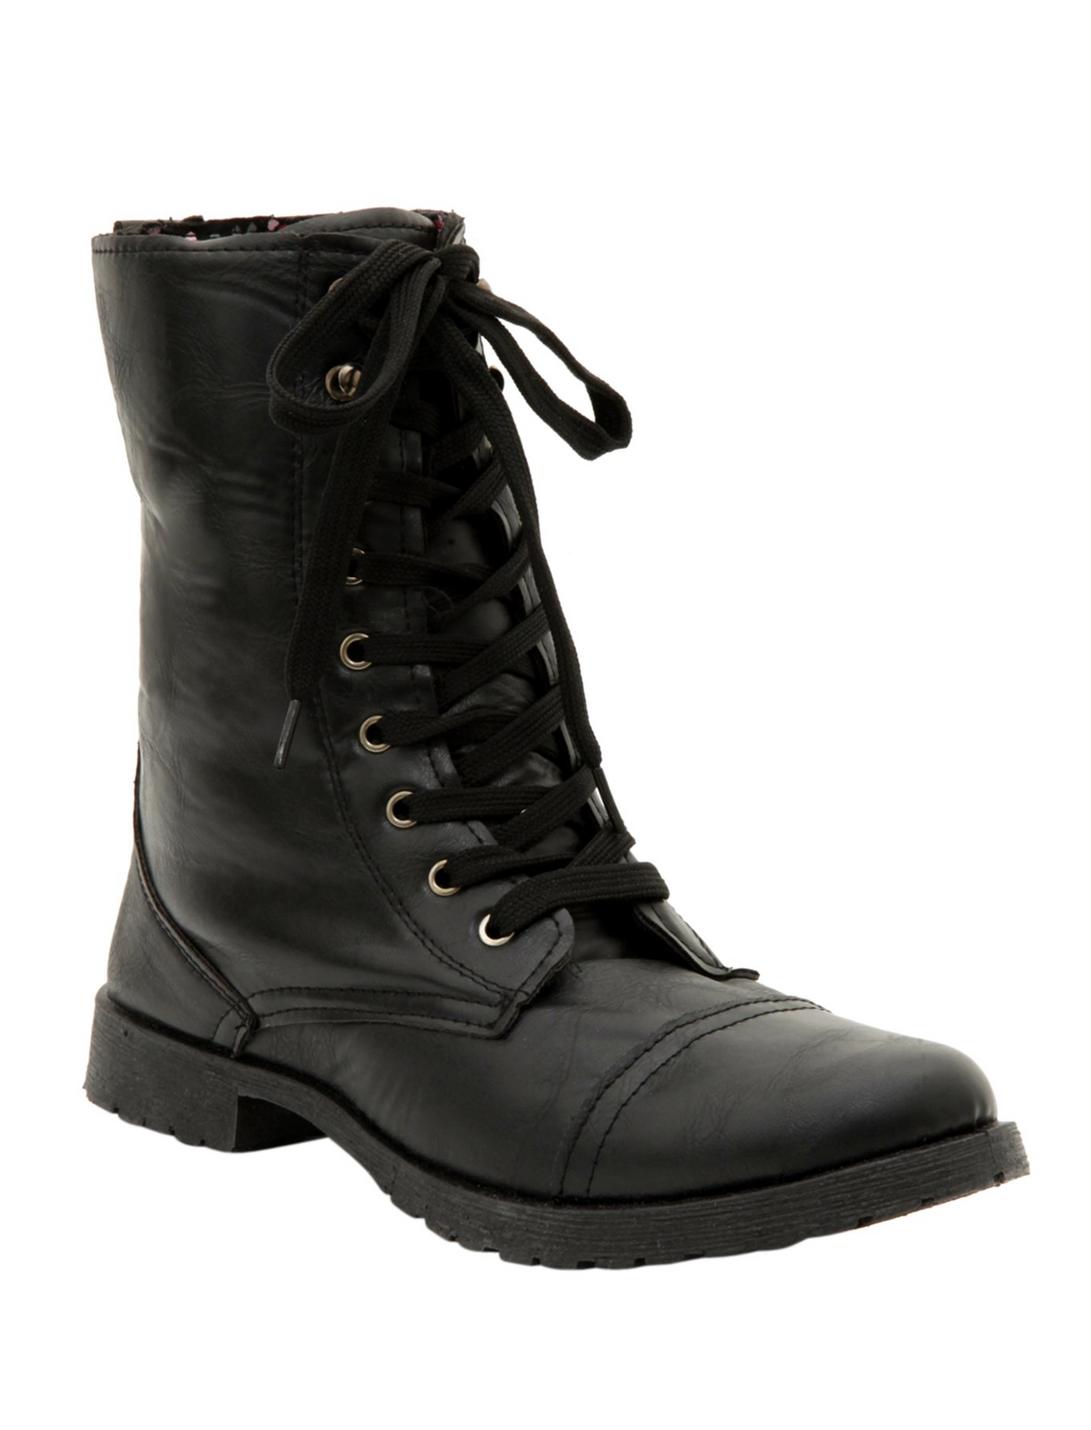 Black Floral Lined Combat Boot, BLACK, hi-res